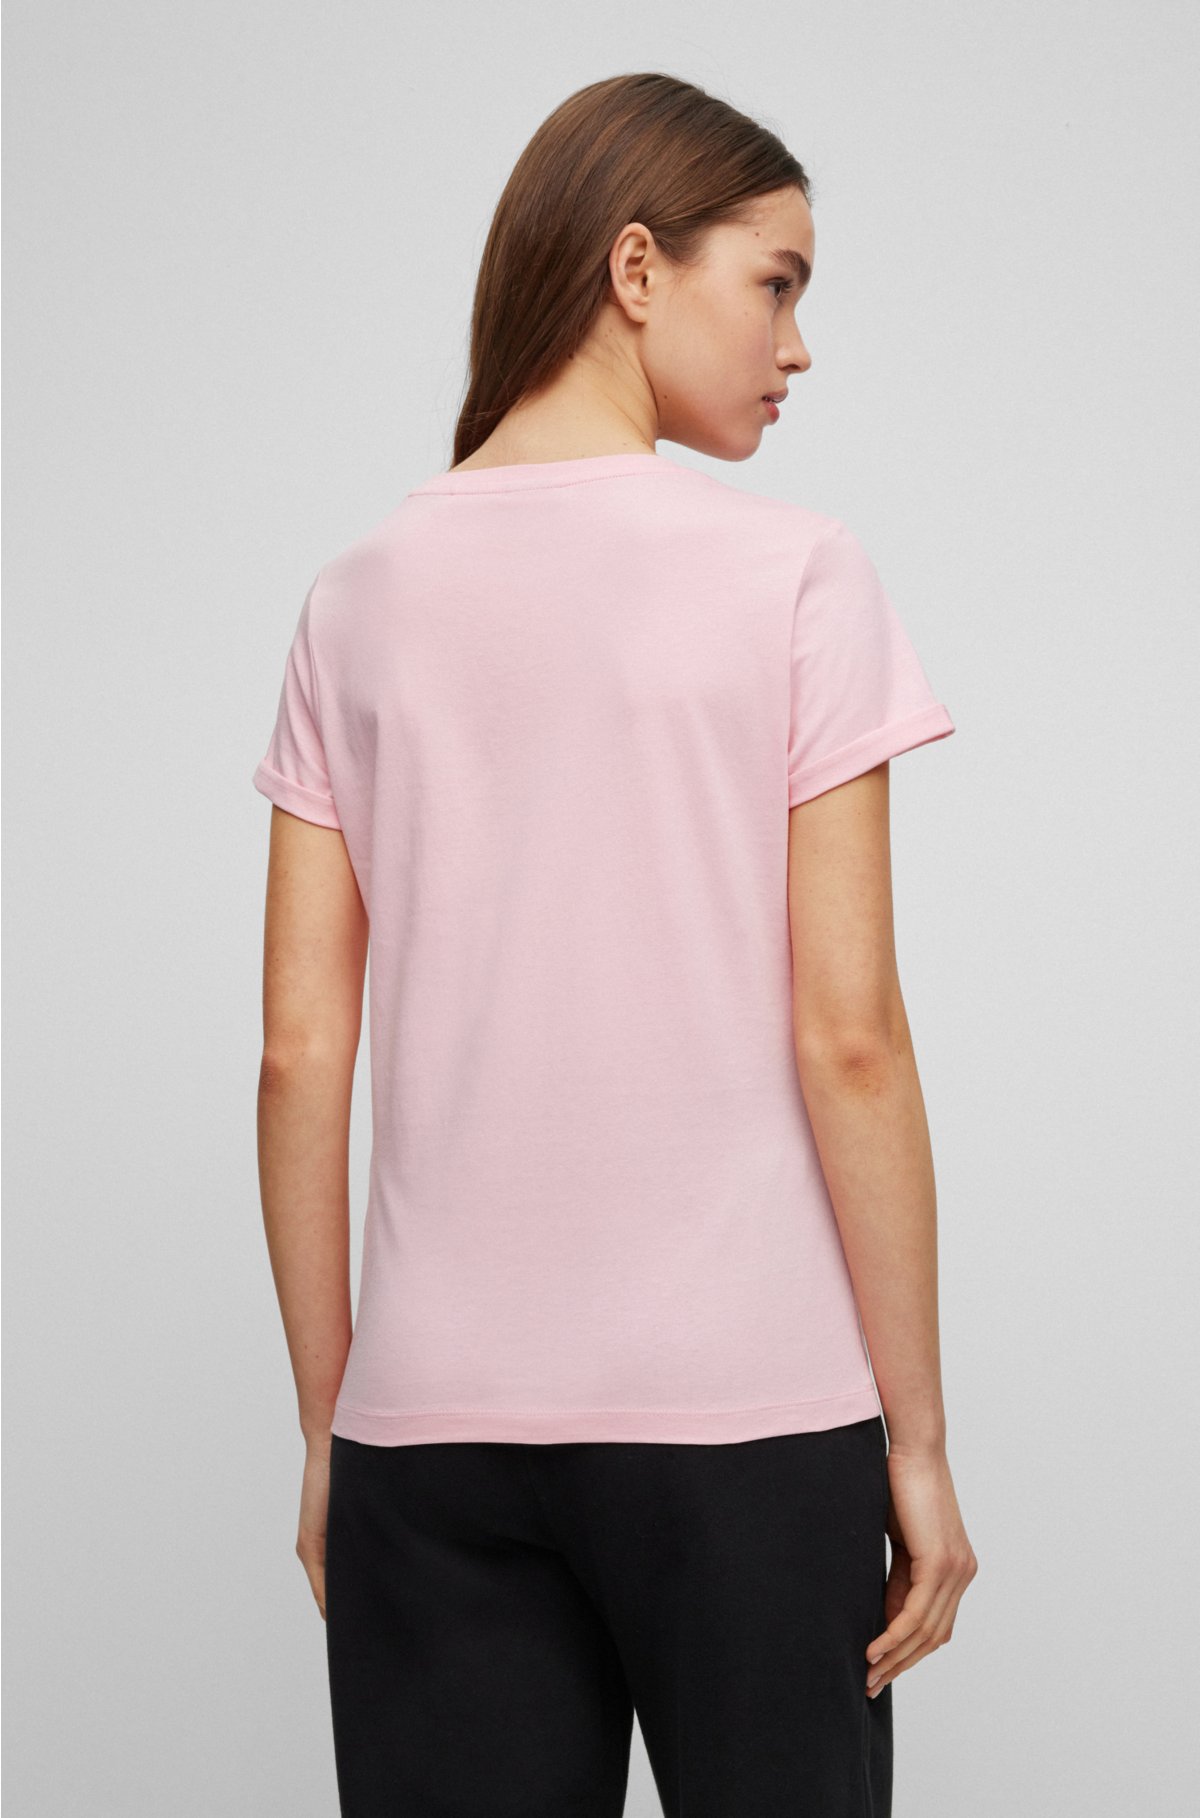 Cotton-jersey slim-fit T-shirt with graffiti-style logo, light pink